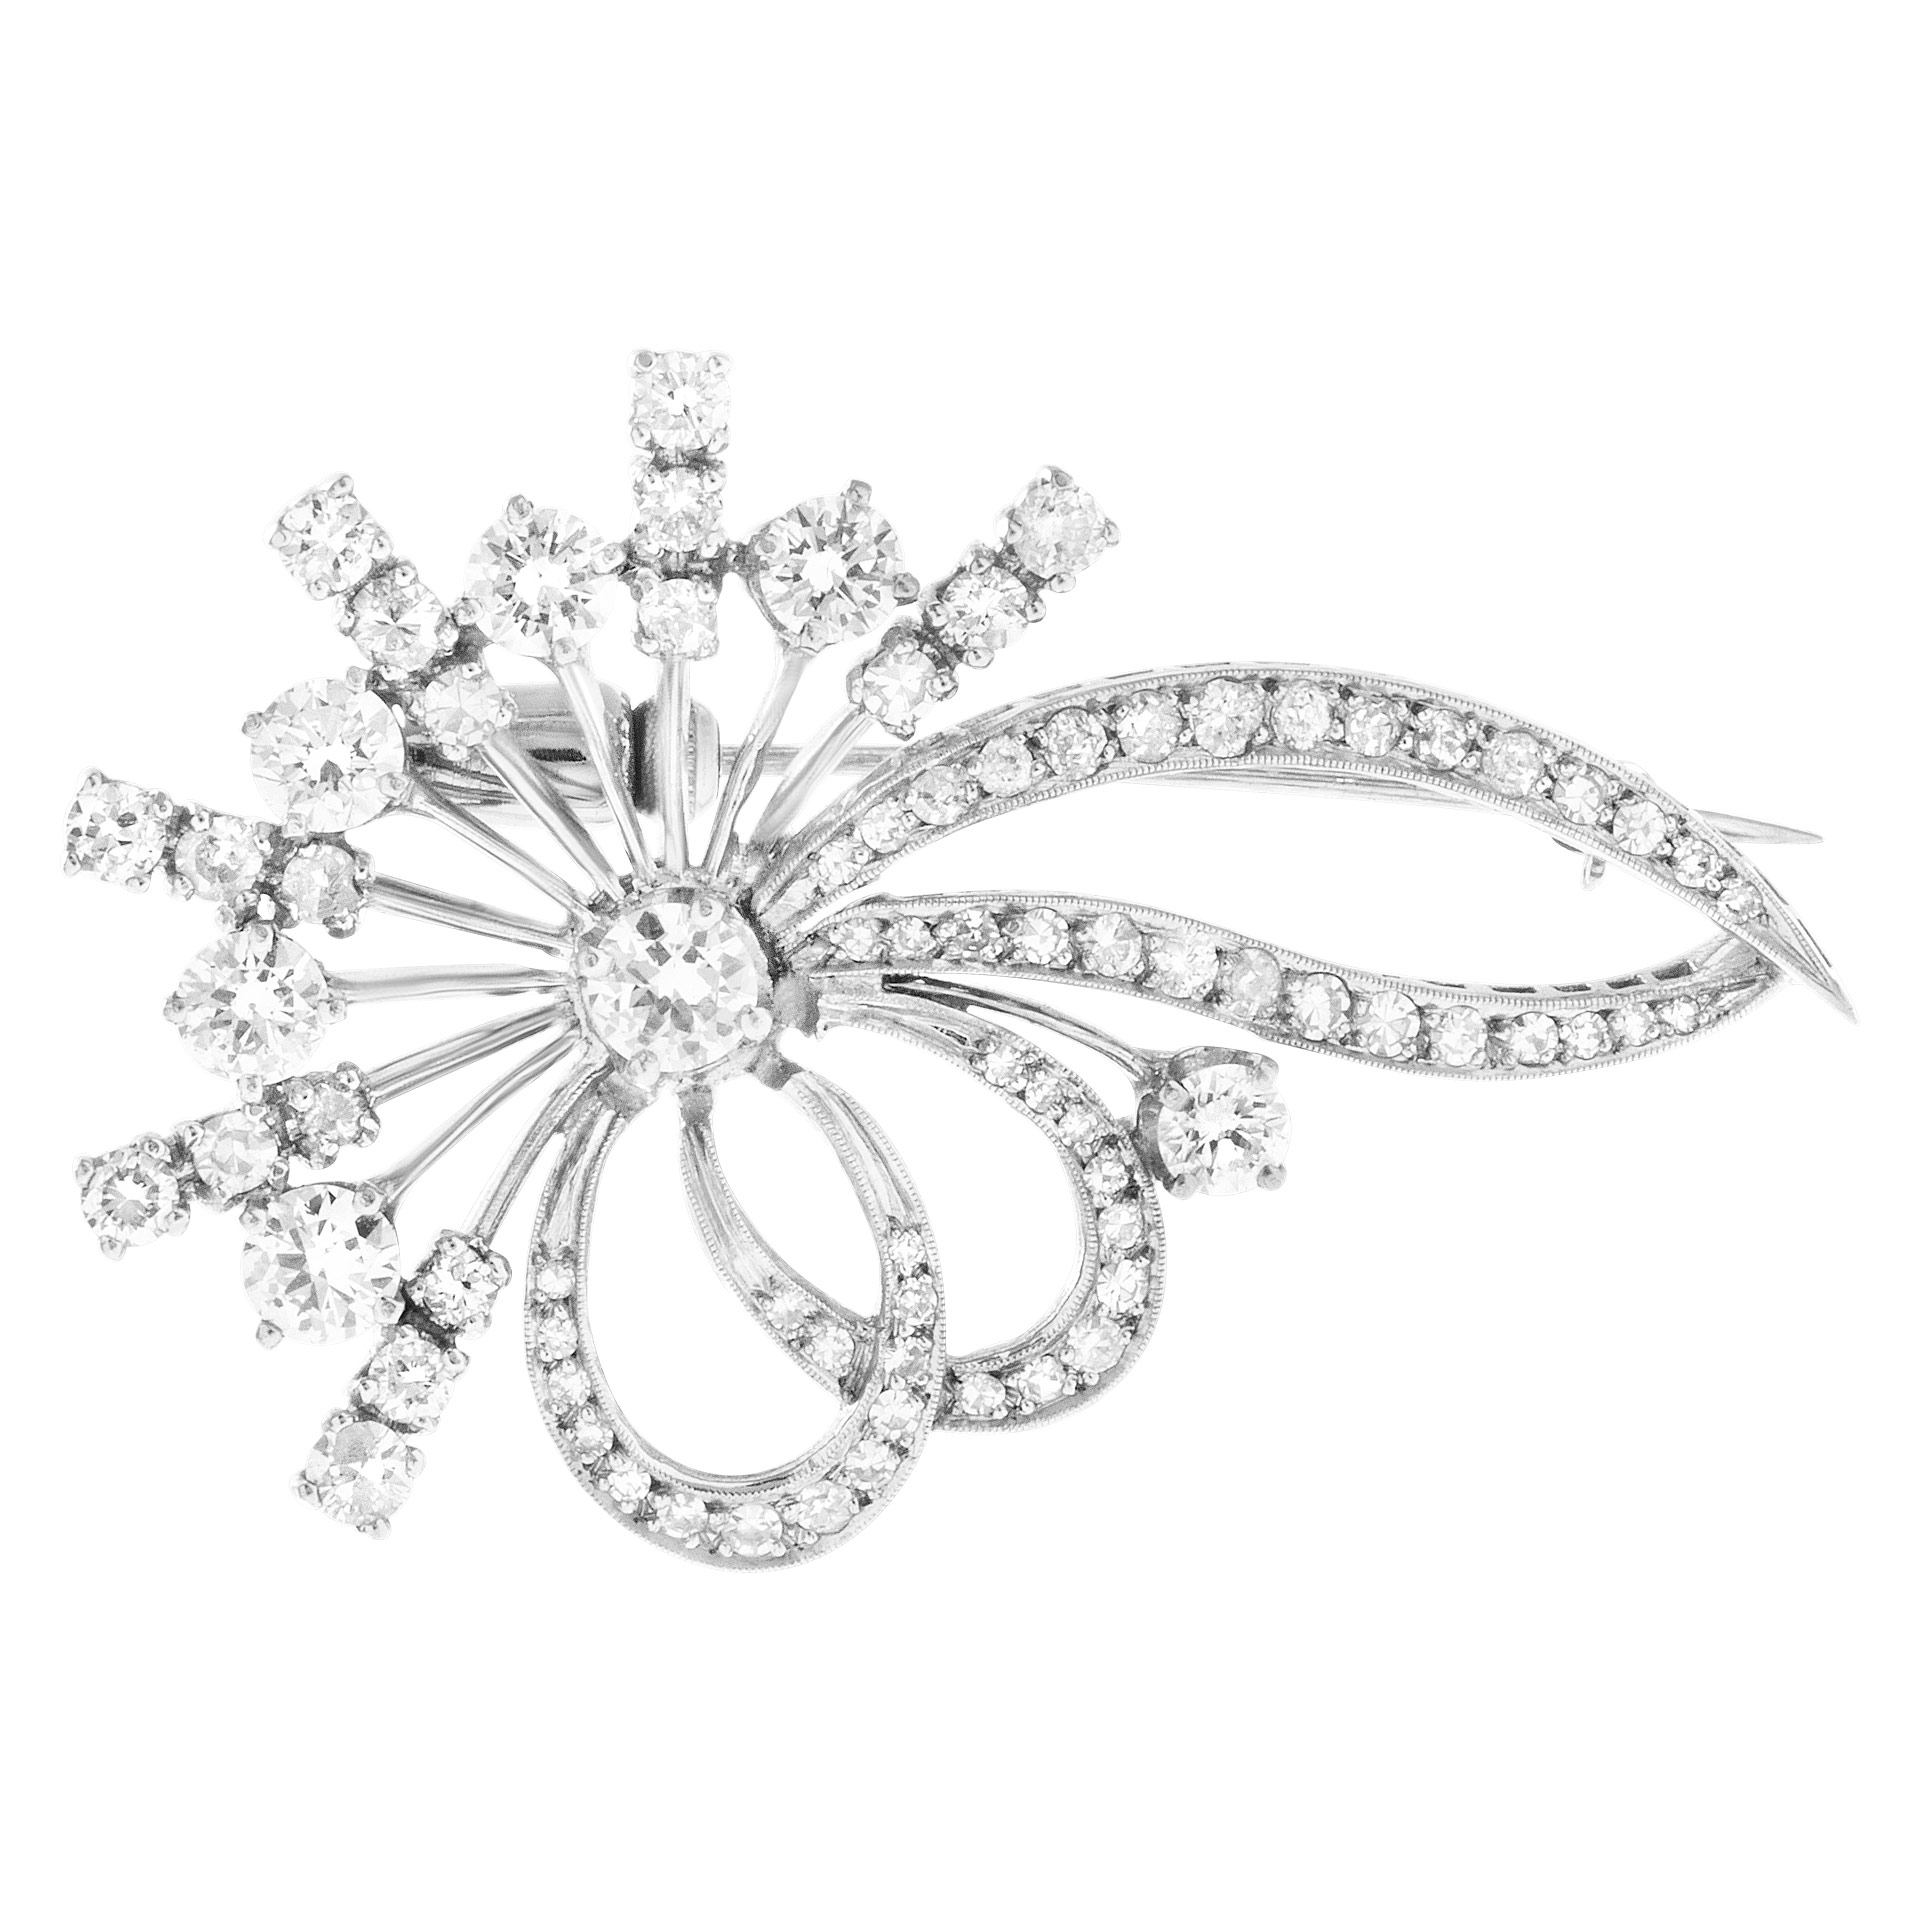 Diamond flower pin/broach in 14k white gold. 3.00 carats in diamonds